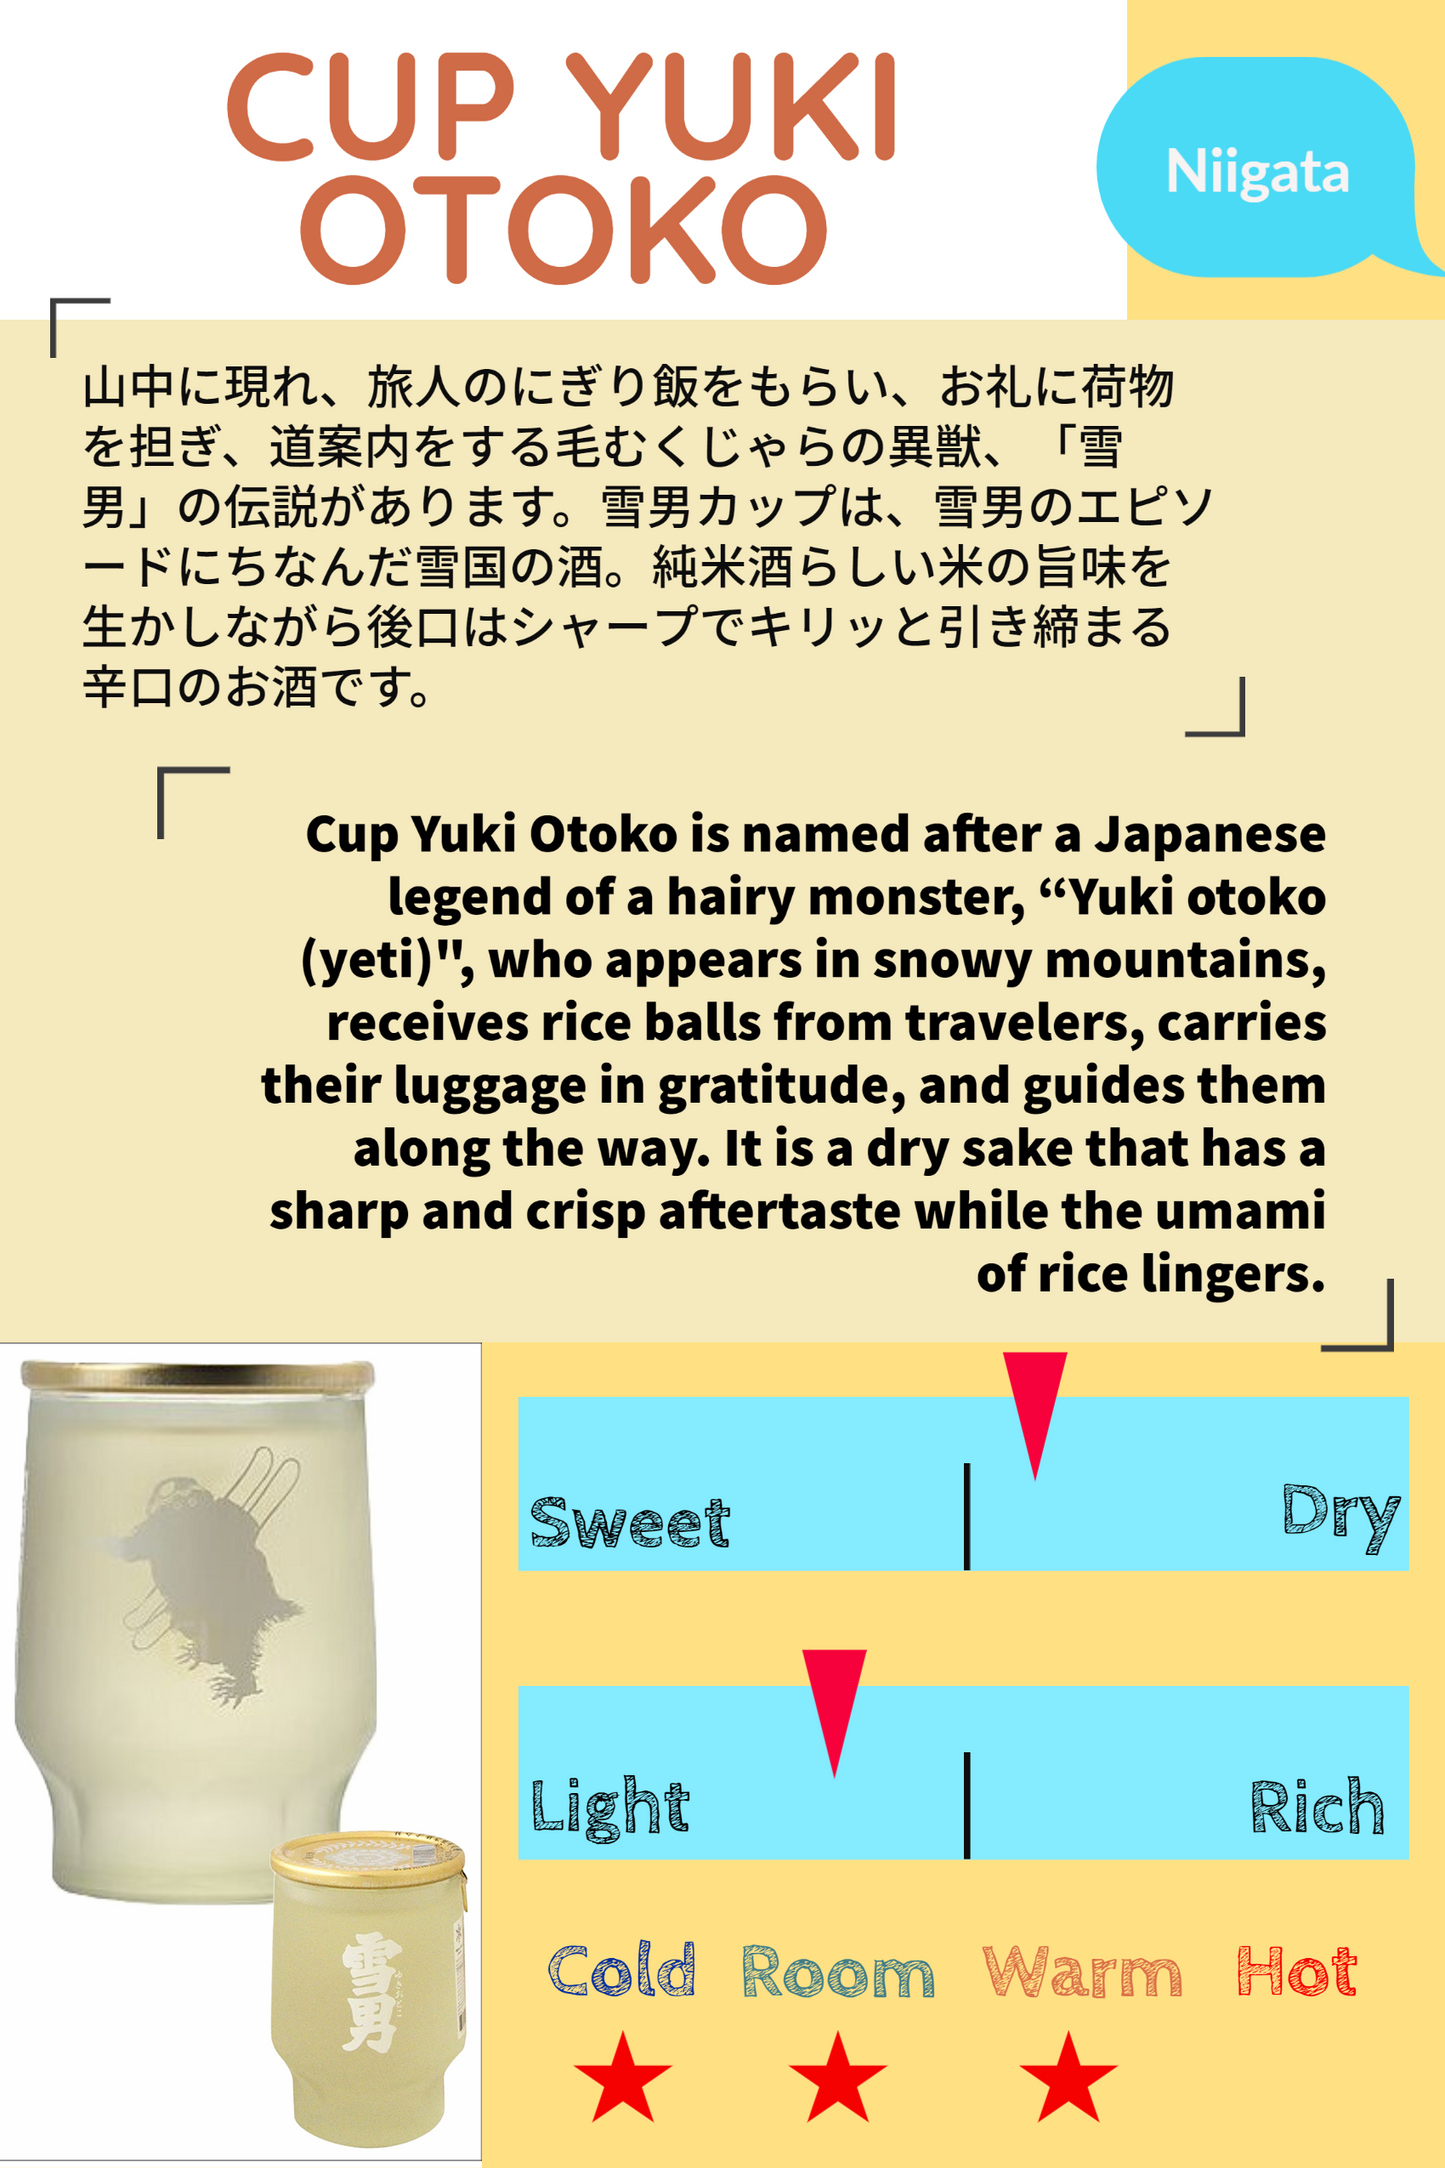 CUP YUKI OTOKO